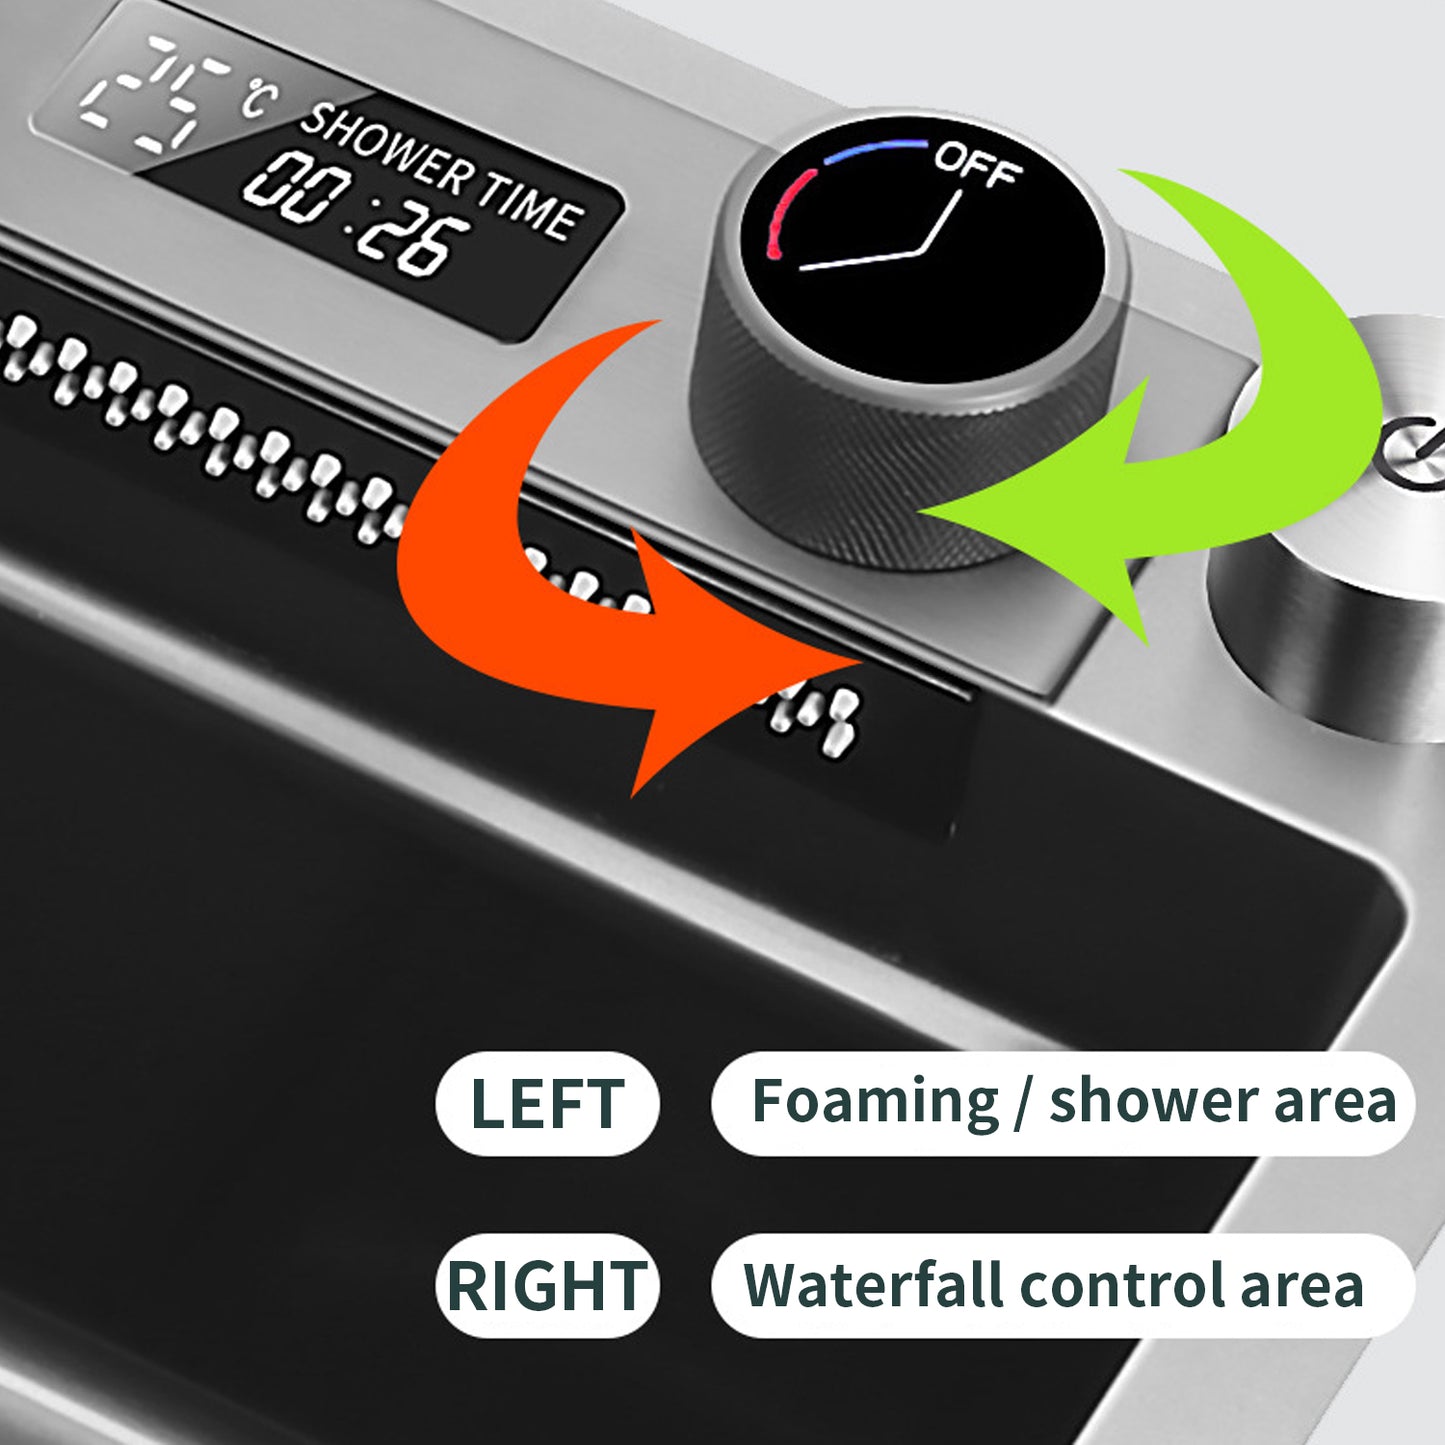 Bliote™ Waterfall Workstation Kitchen Sink Set With Digital Temperature Display & Knife Holder